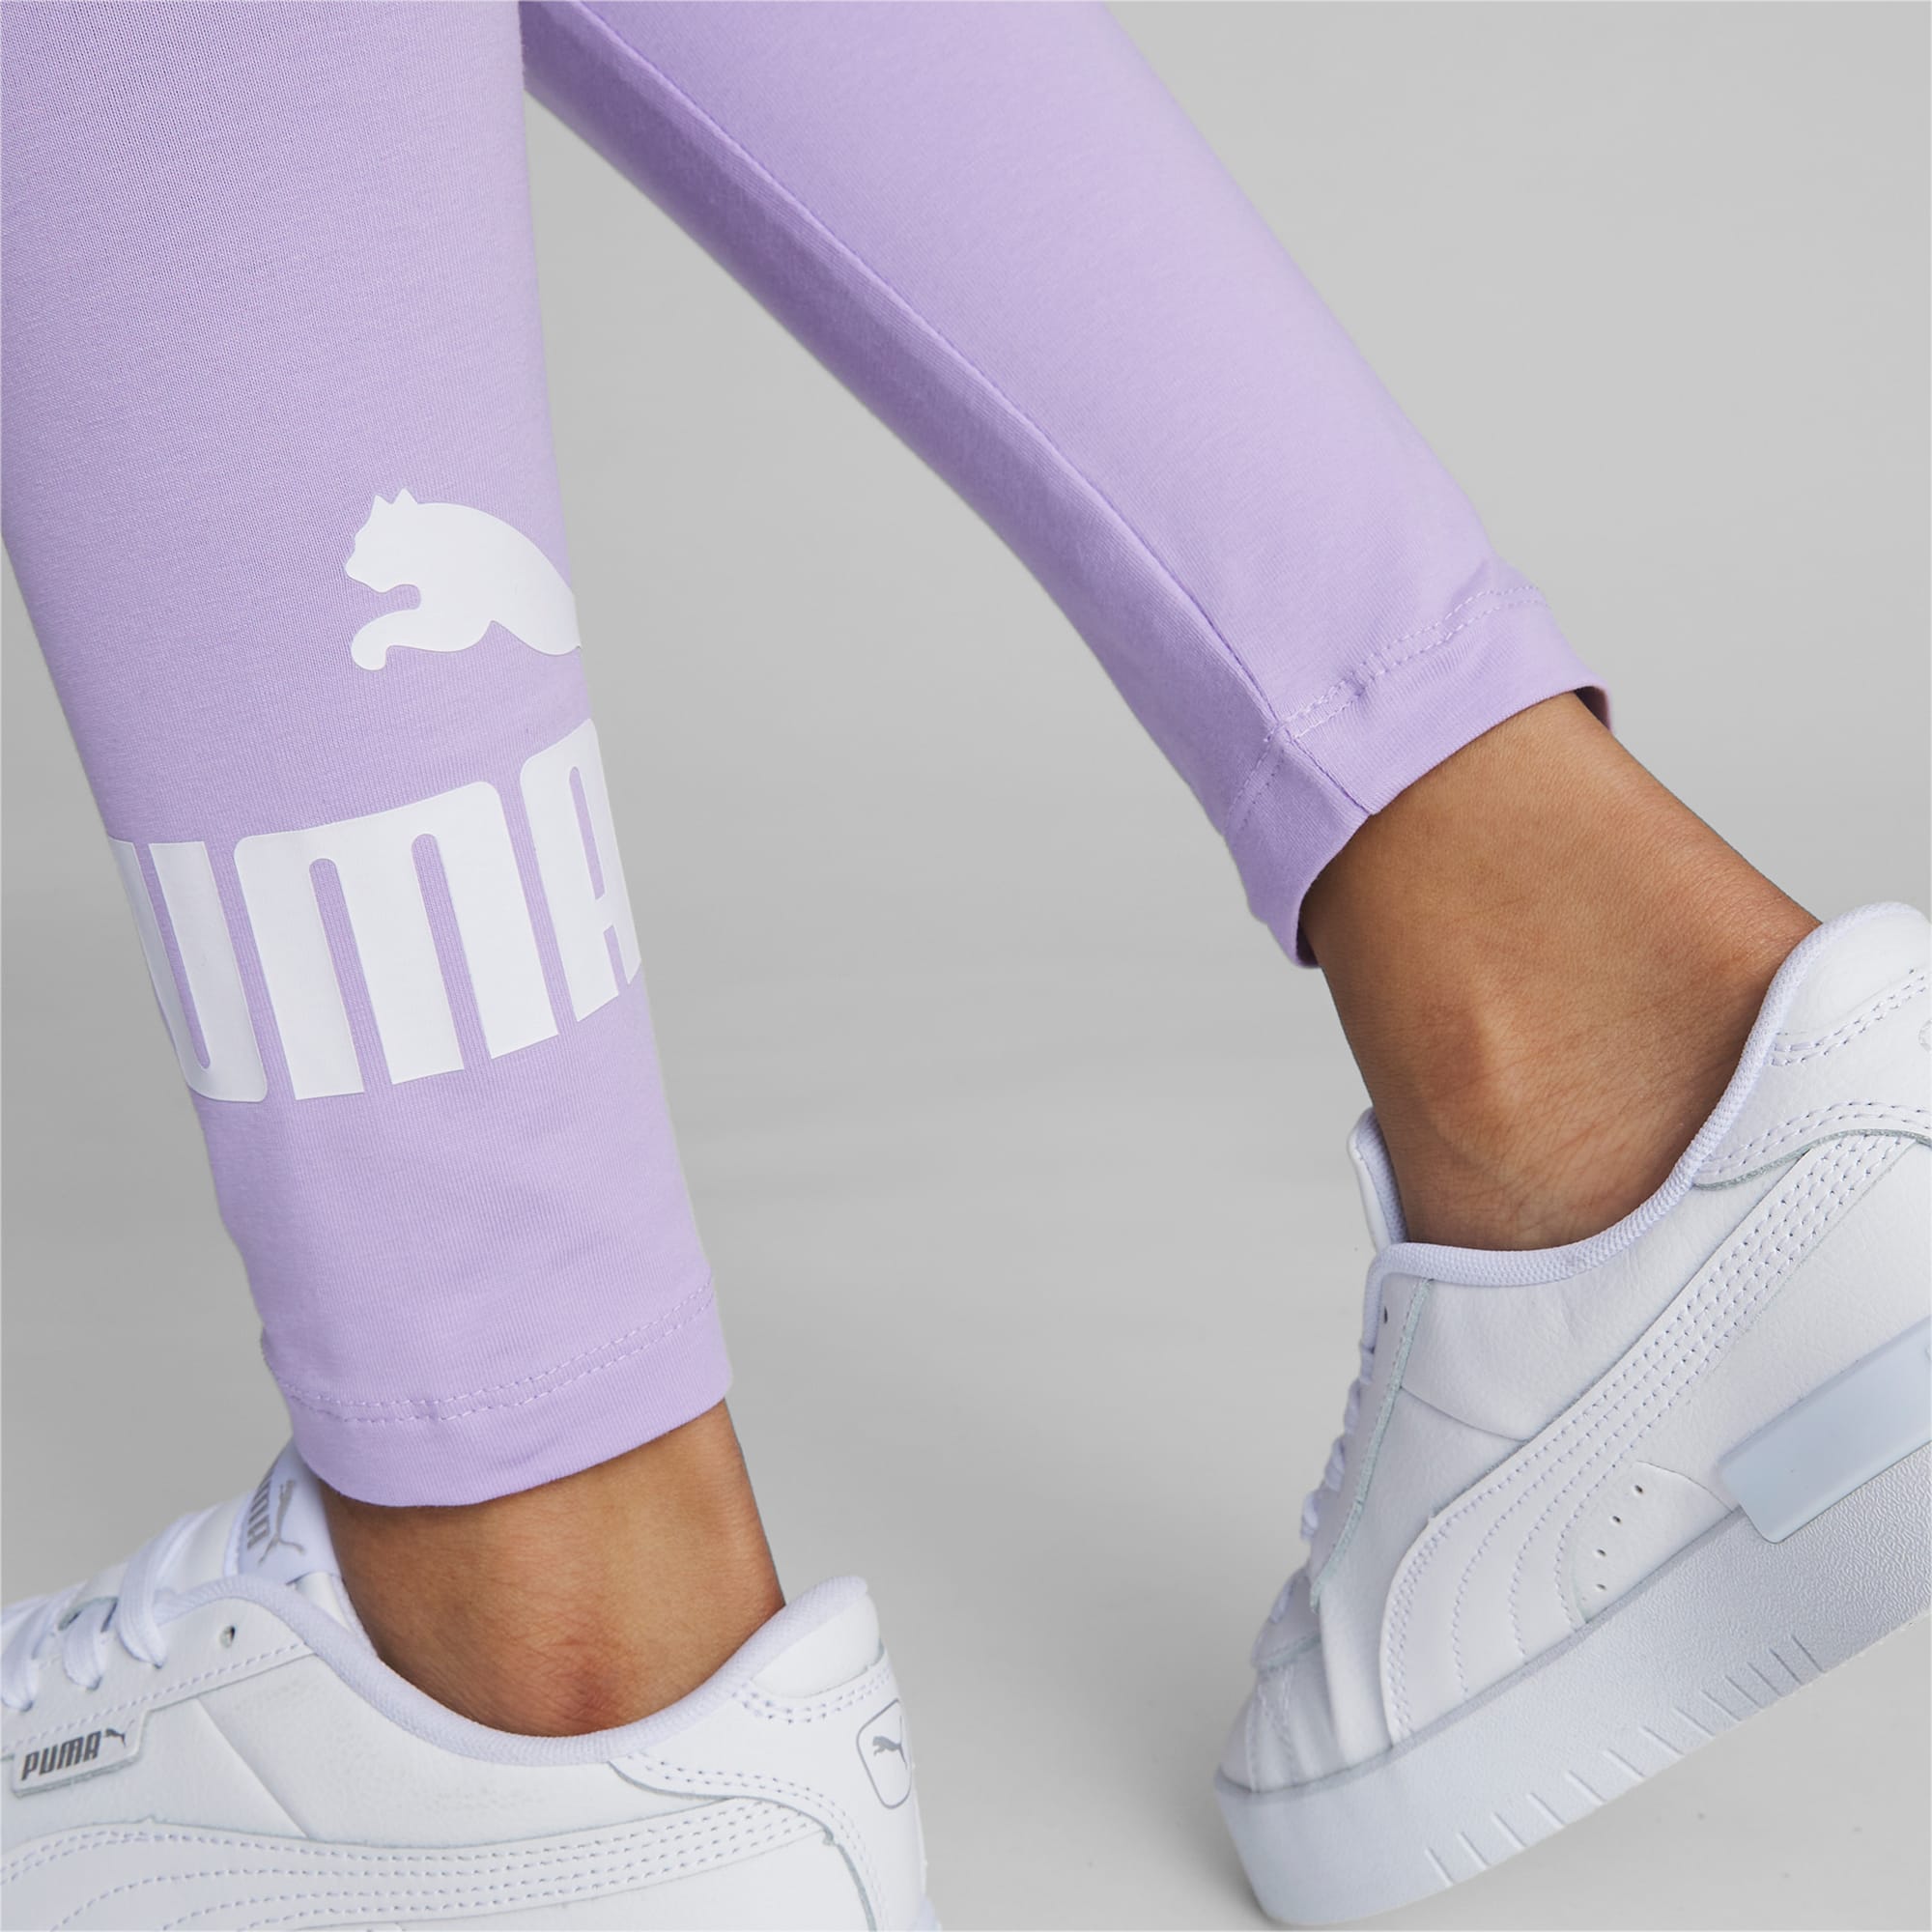 Legging woman Puma ESS+ marbleized - Puma - Brands - Lifestyle